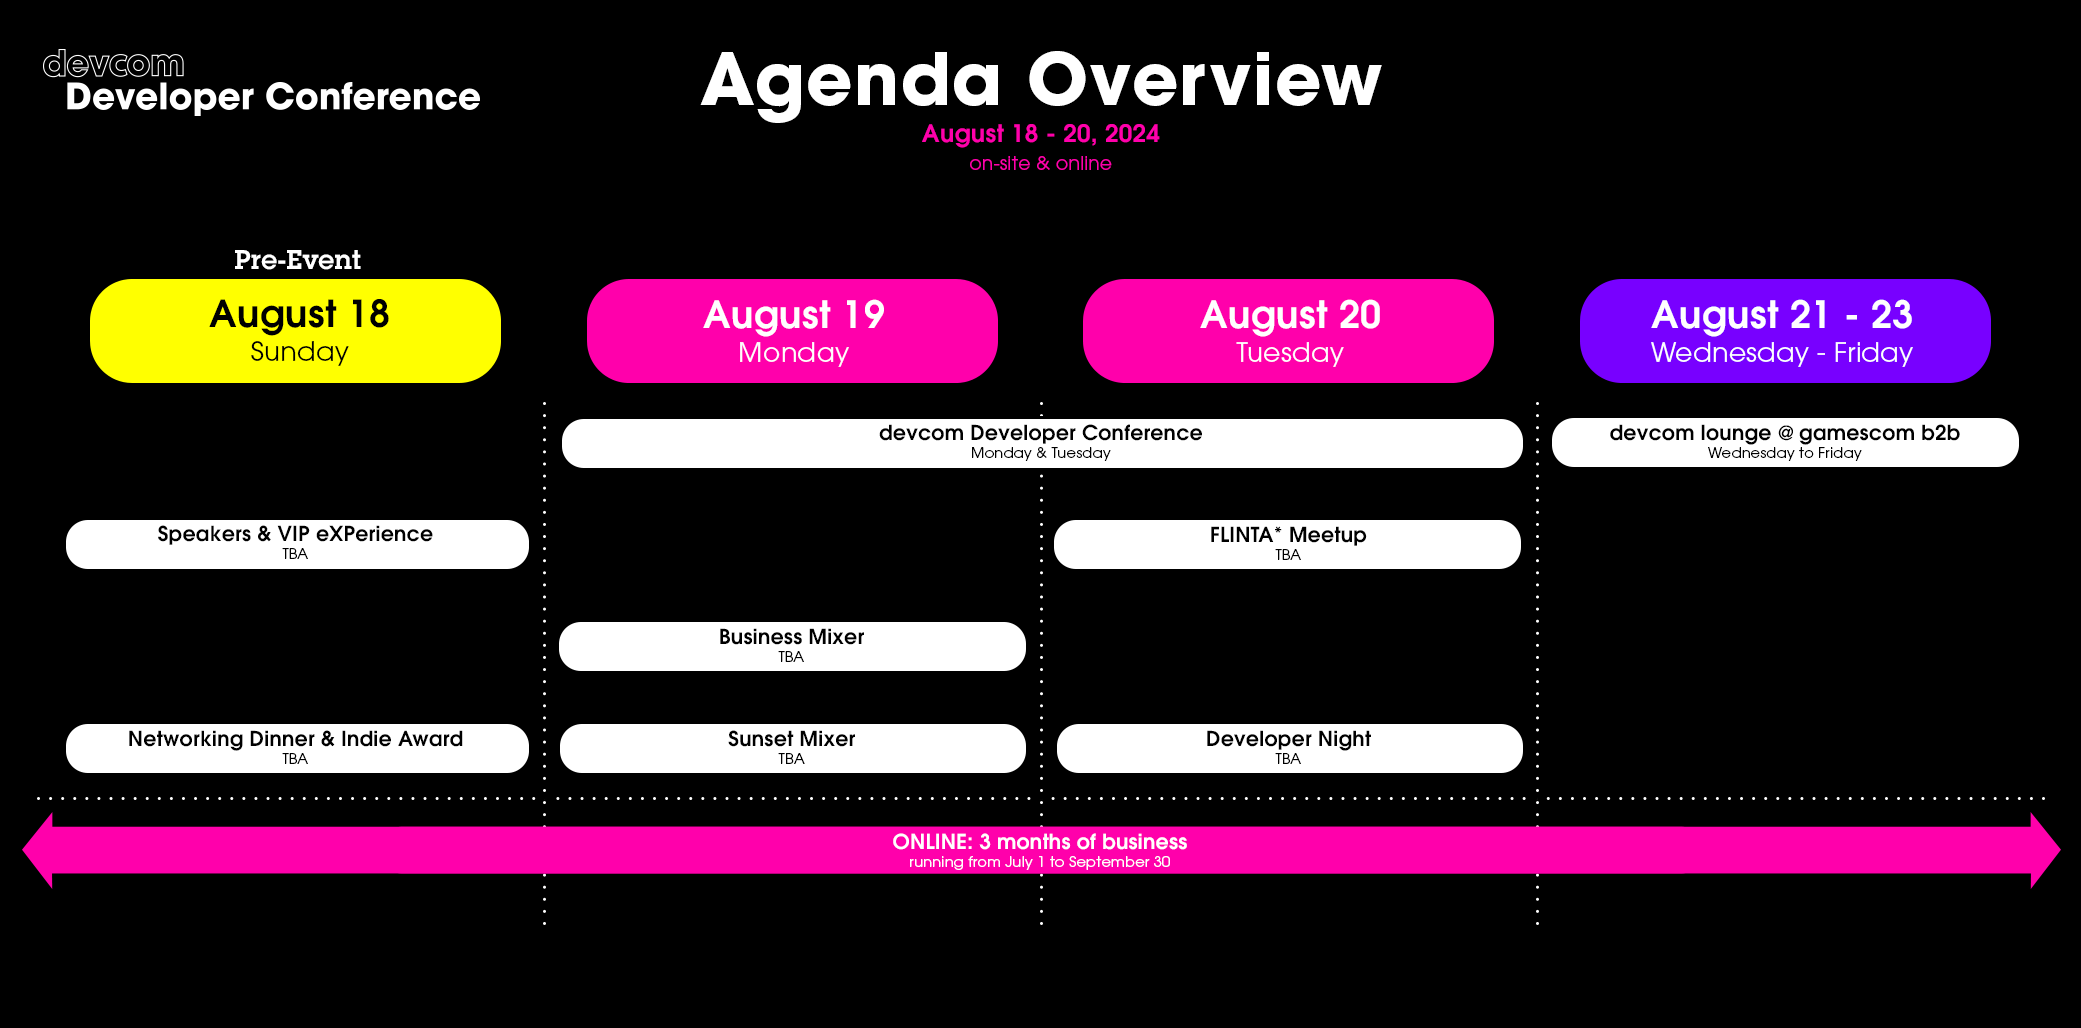 Overview of agenda points during devcom developer conference